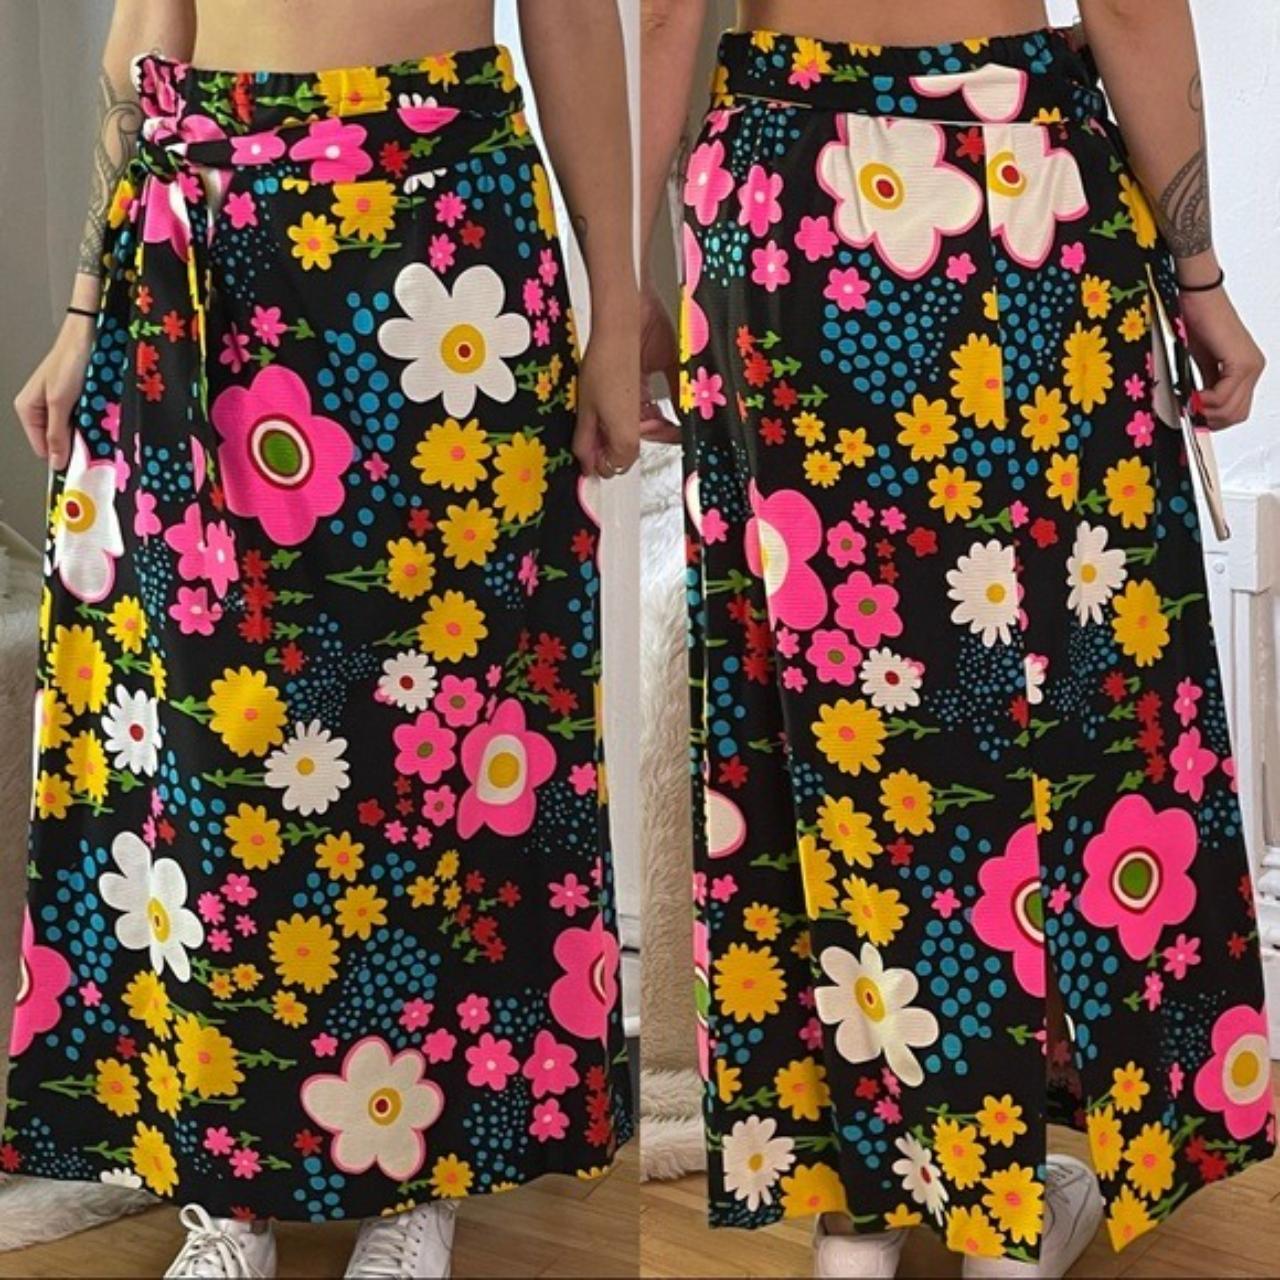 Product Image 1 - Vintage Floral Skirt Size 16
Excellent